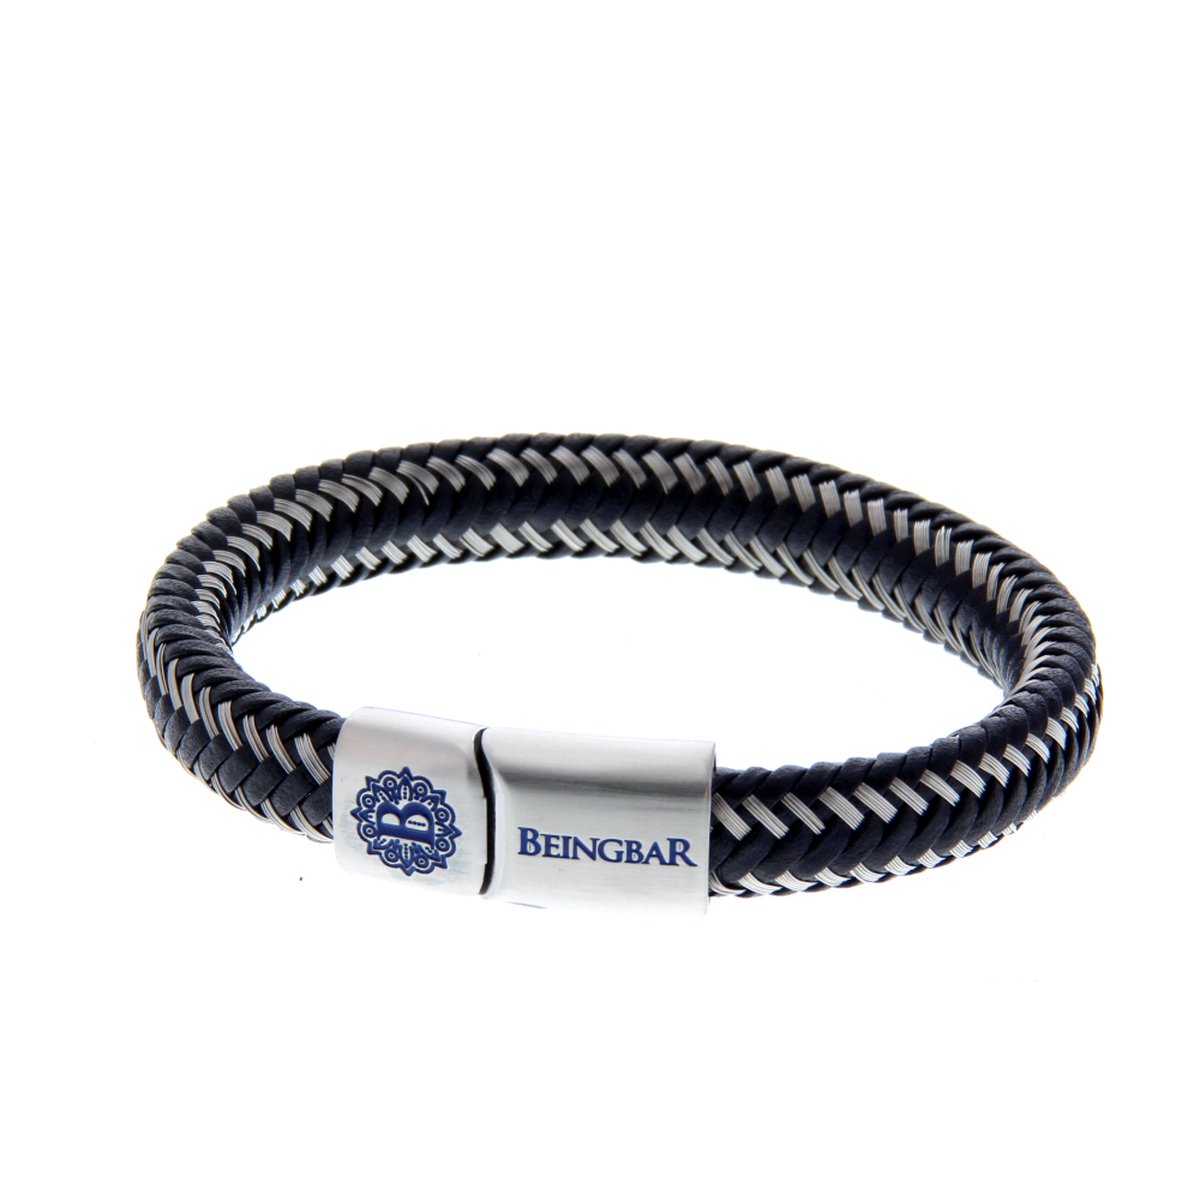 BEINGBAR Bracelet Armband BNGBR050 100110 M 19.5cm (zwart)